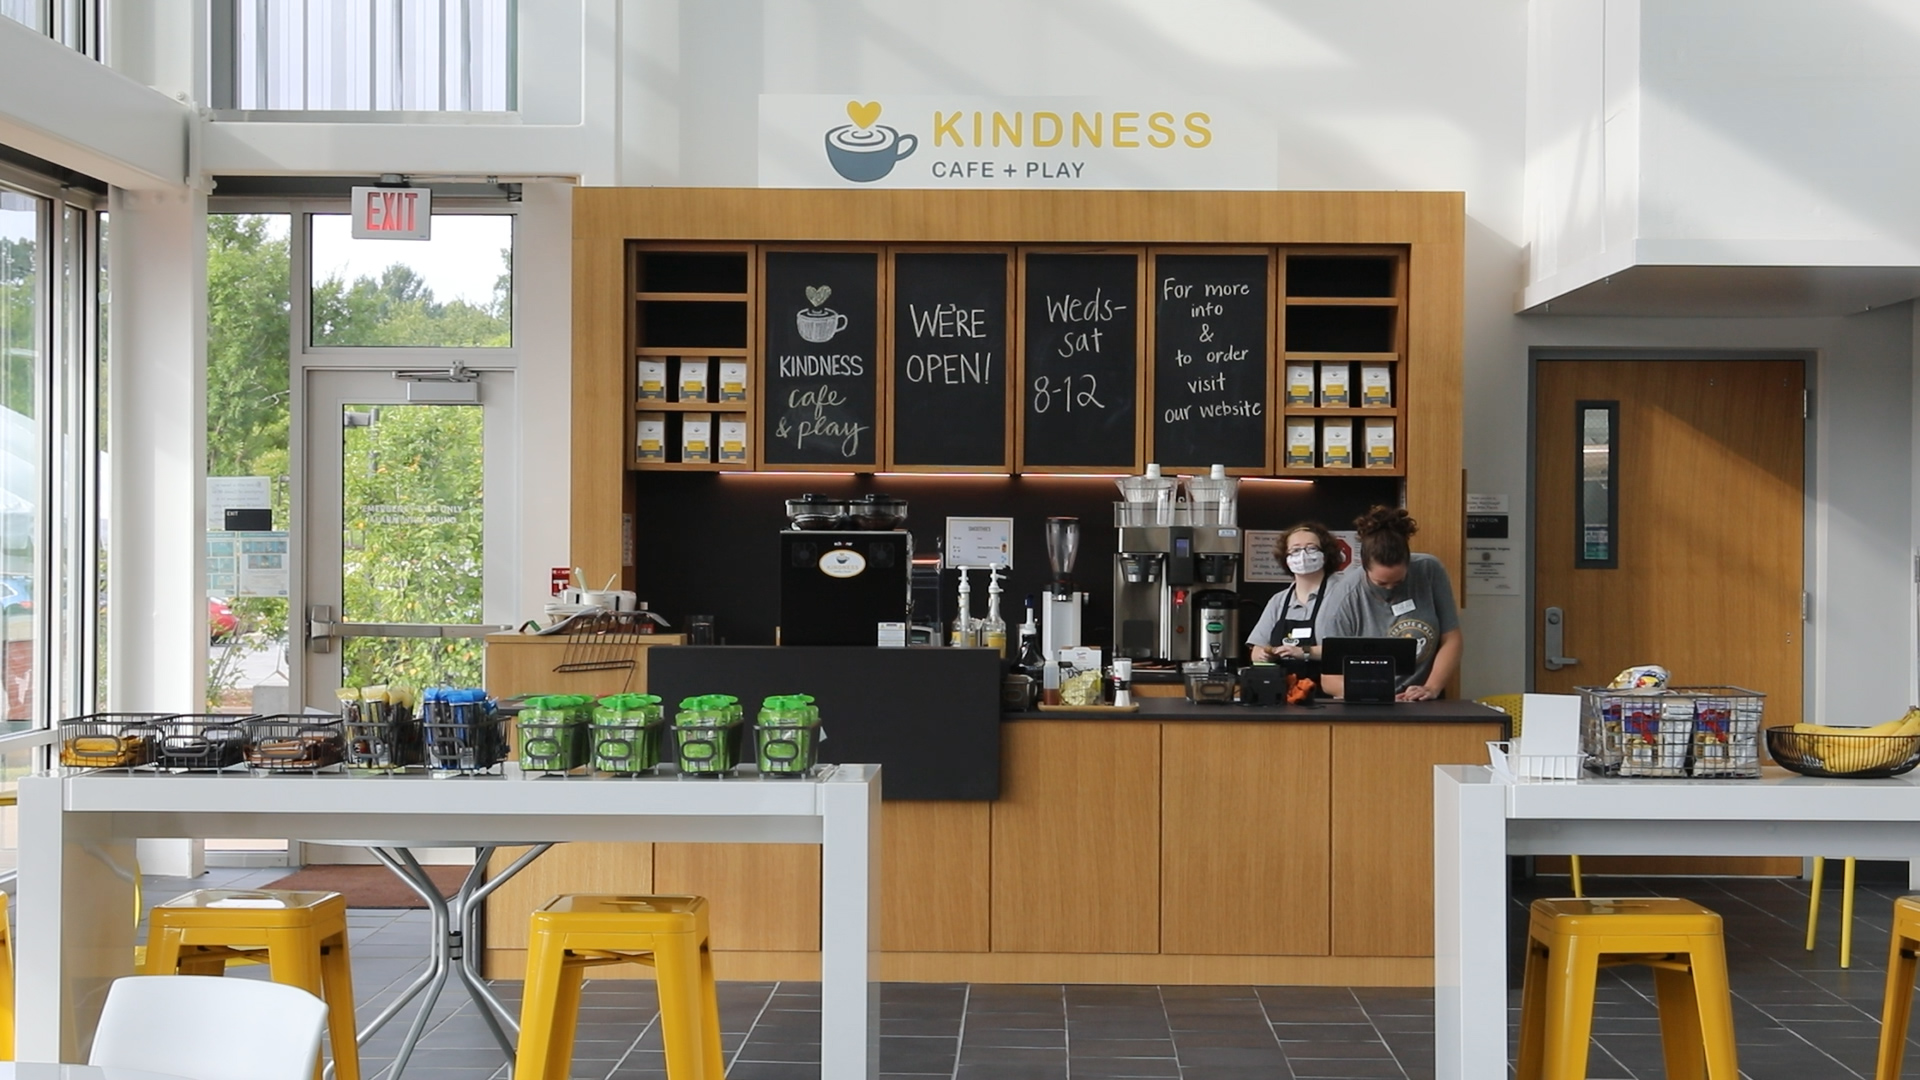 Kindness Café: Pro Bono Design for a Kinder Community